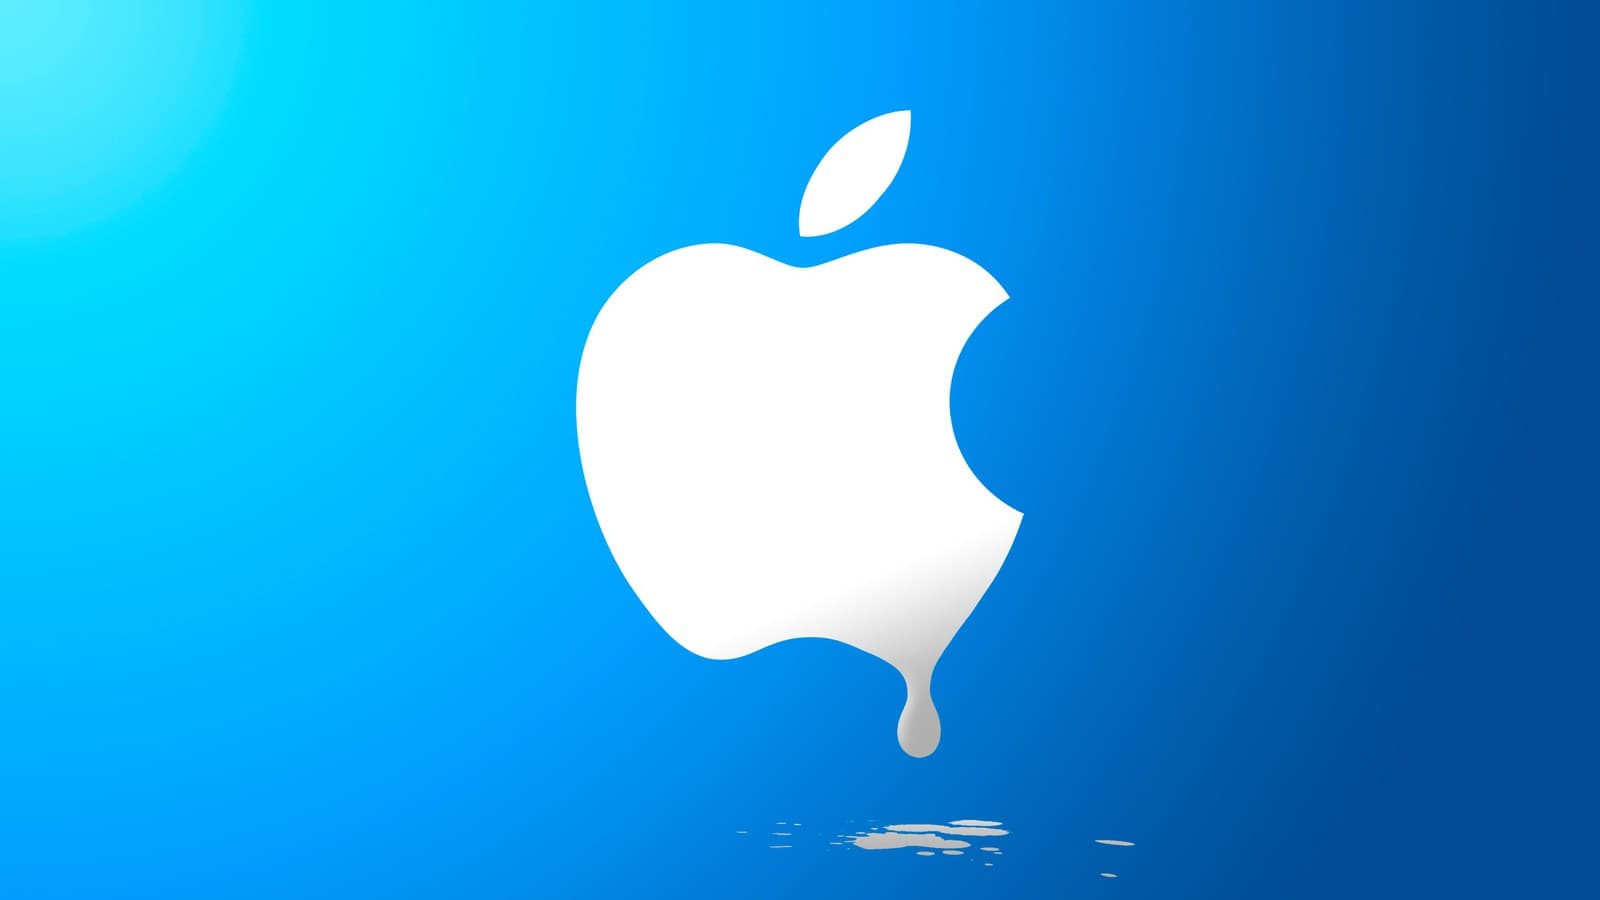 several leakers were warned by apple